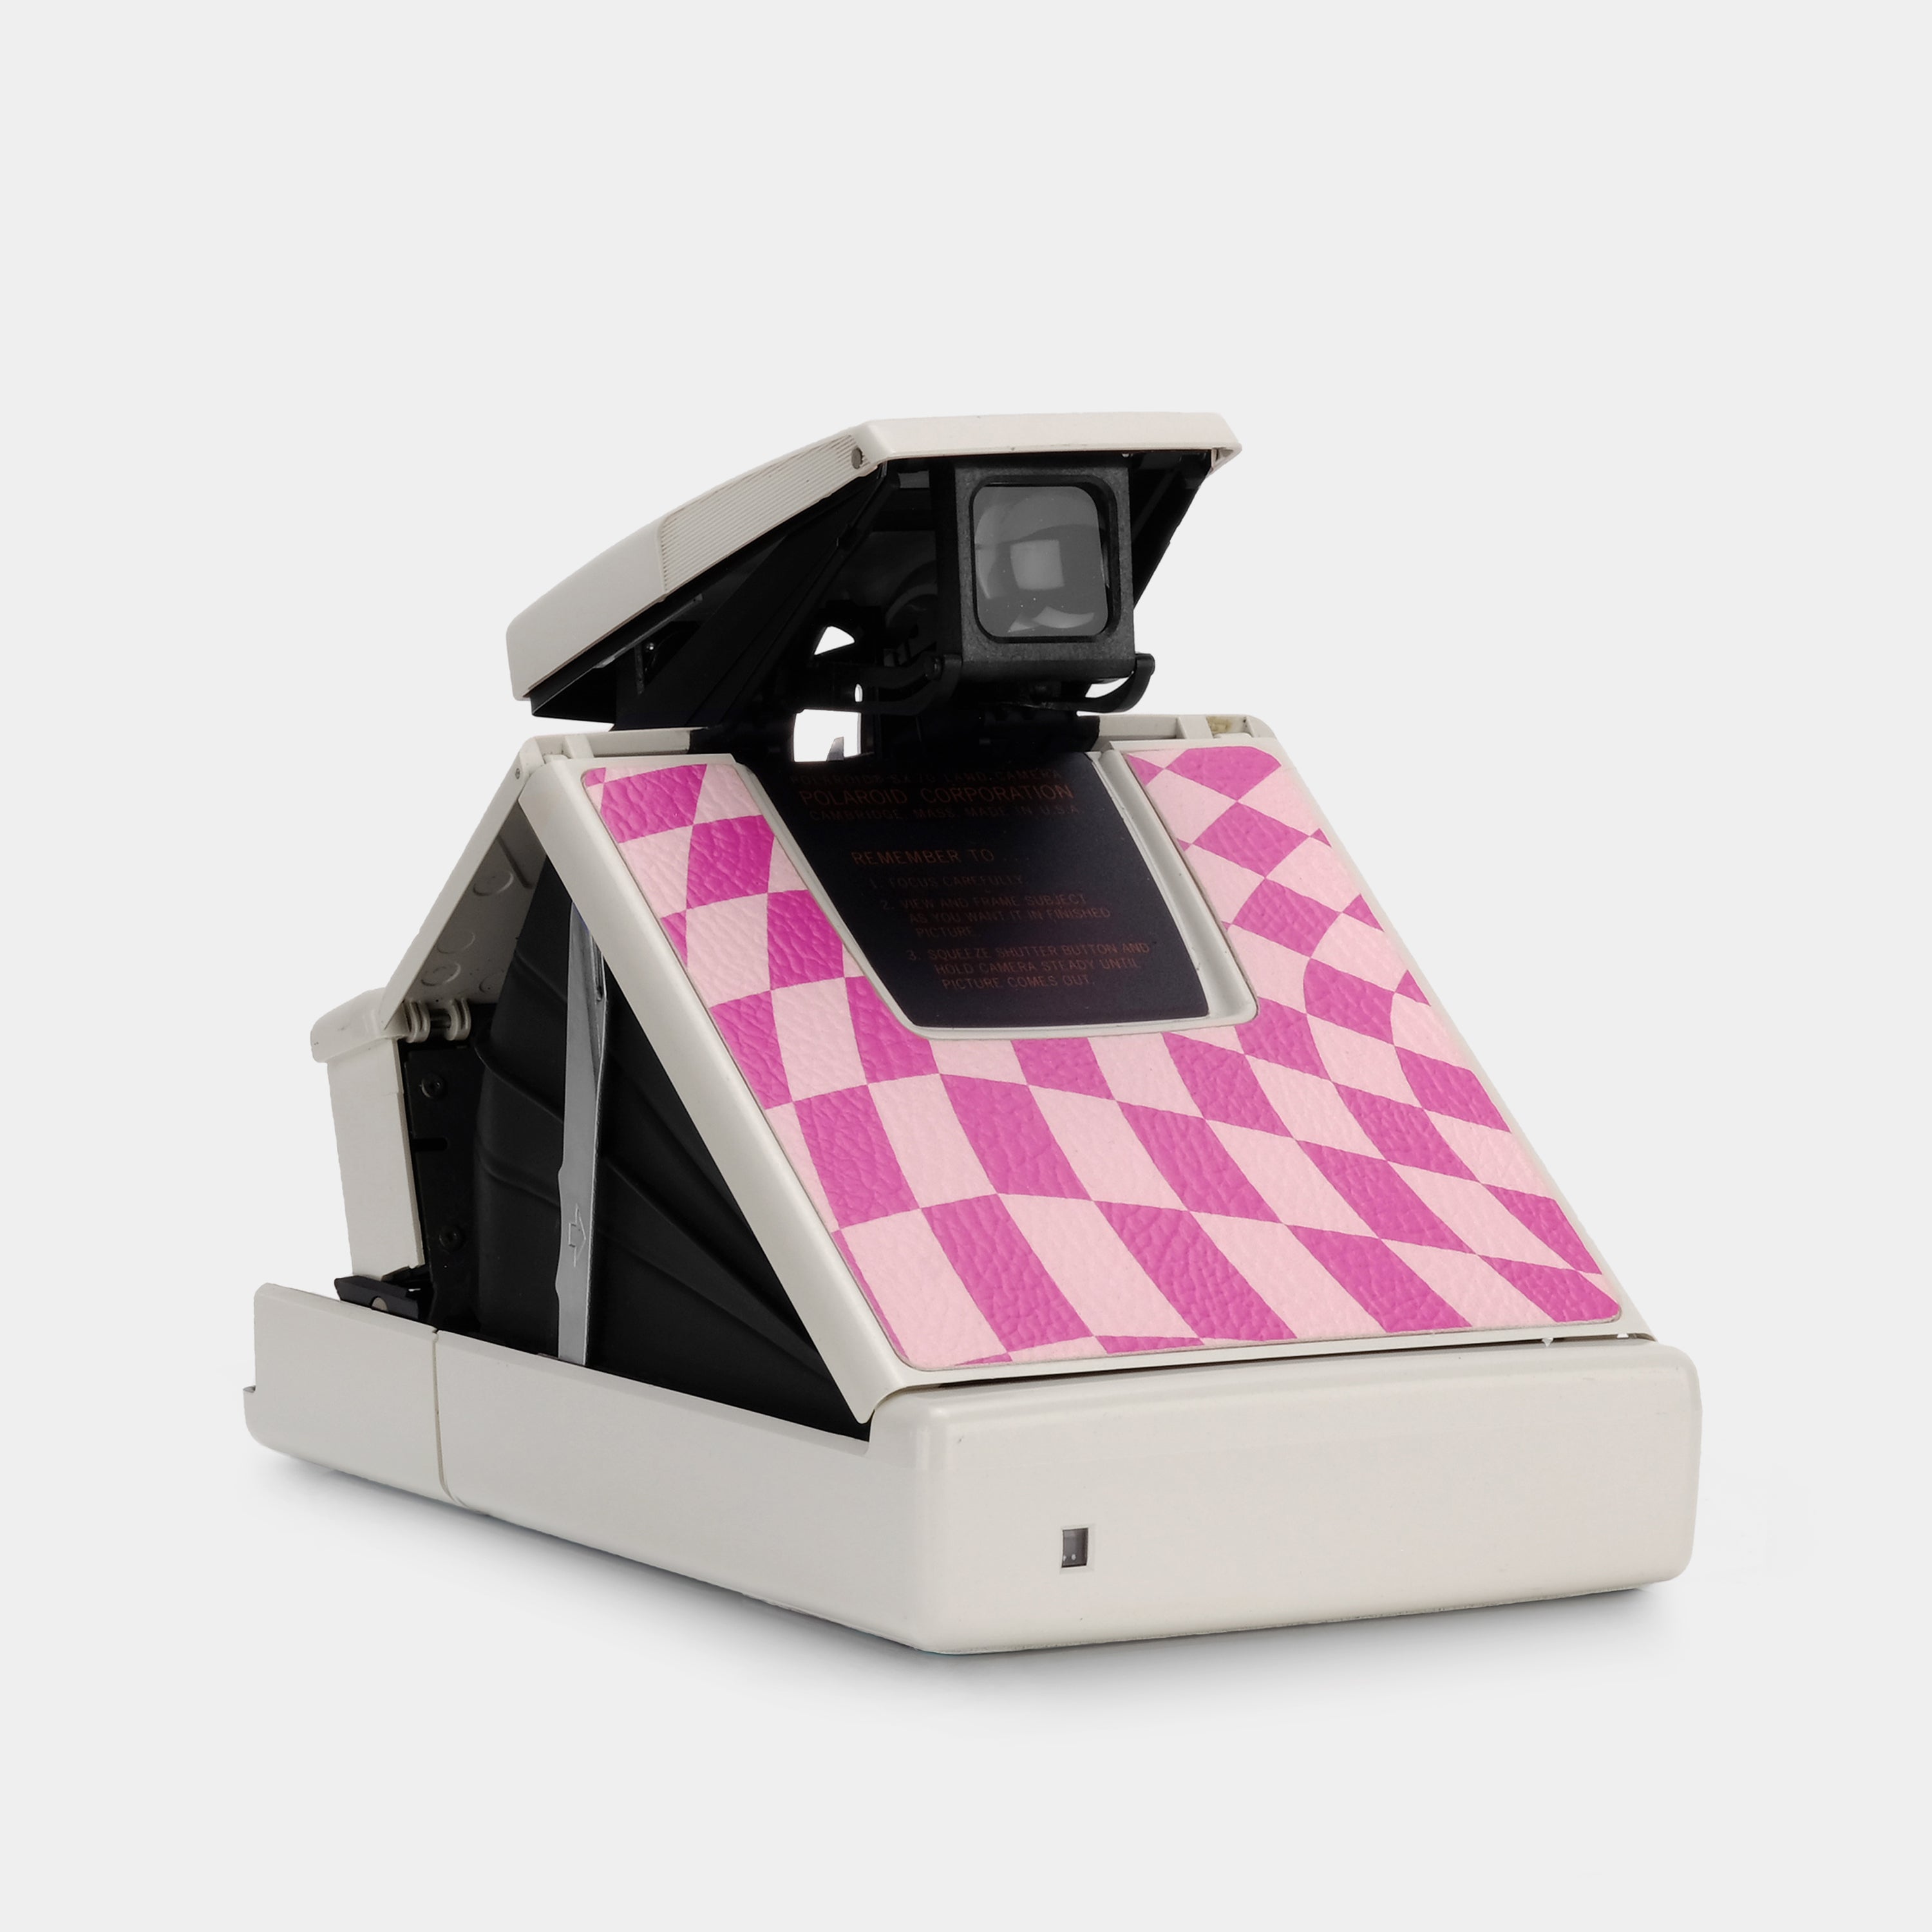 Polaroid SX-70 Model 2 Fuchsia and Pink Wave Check White Folding Instant Film Camera